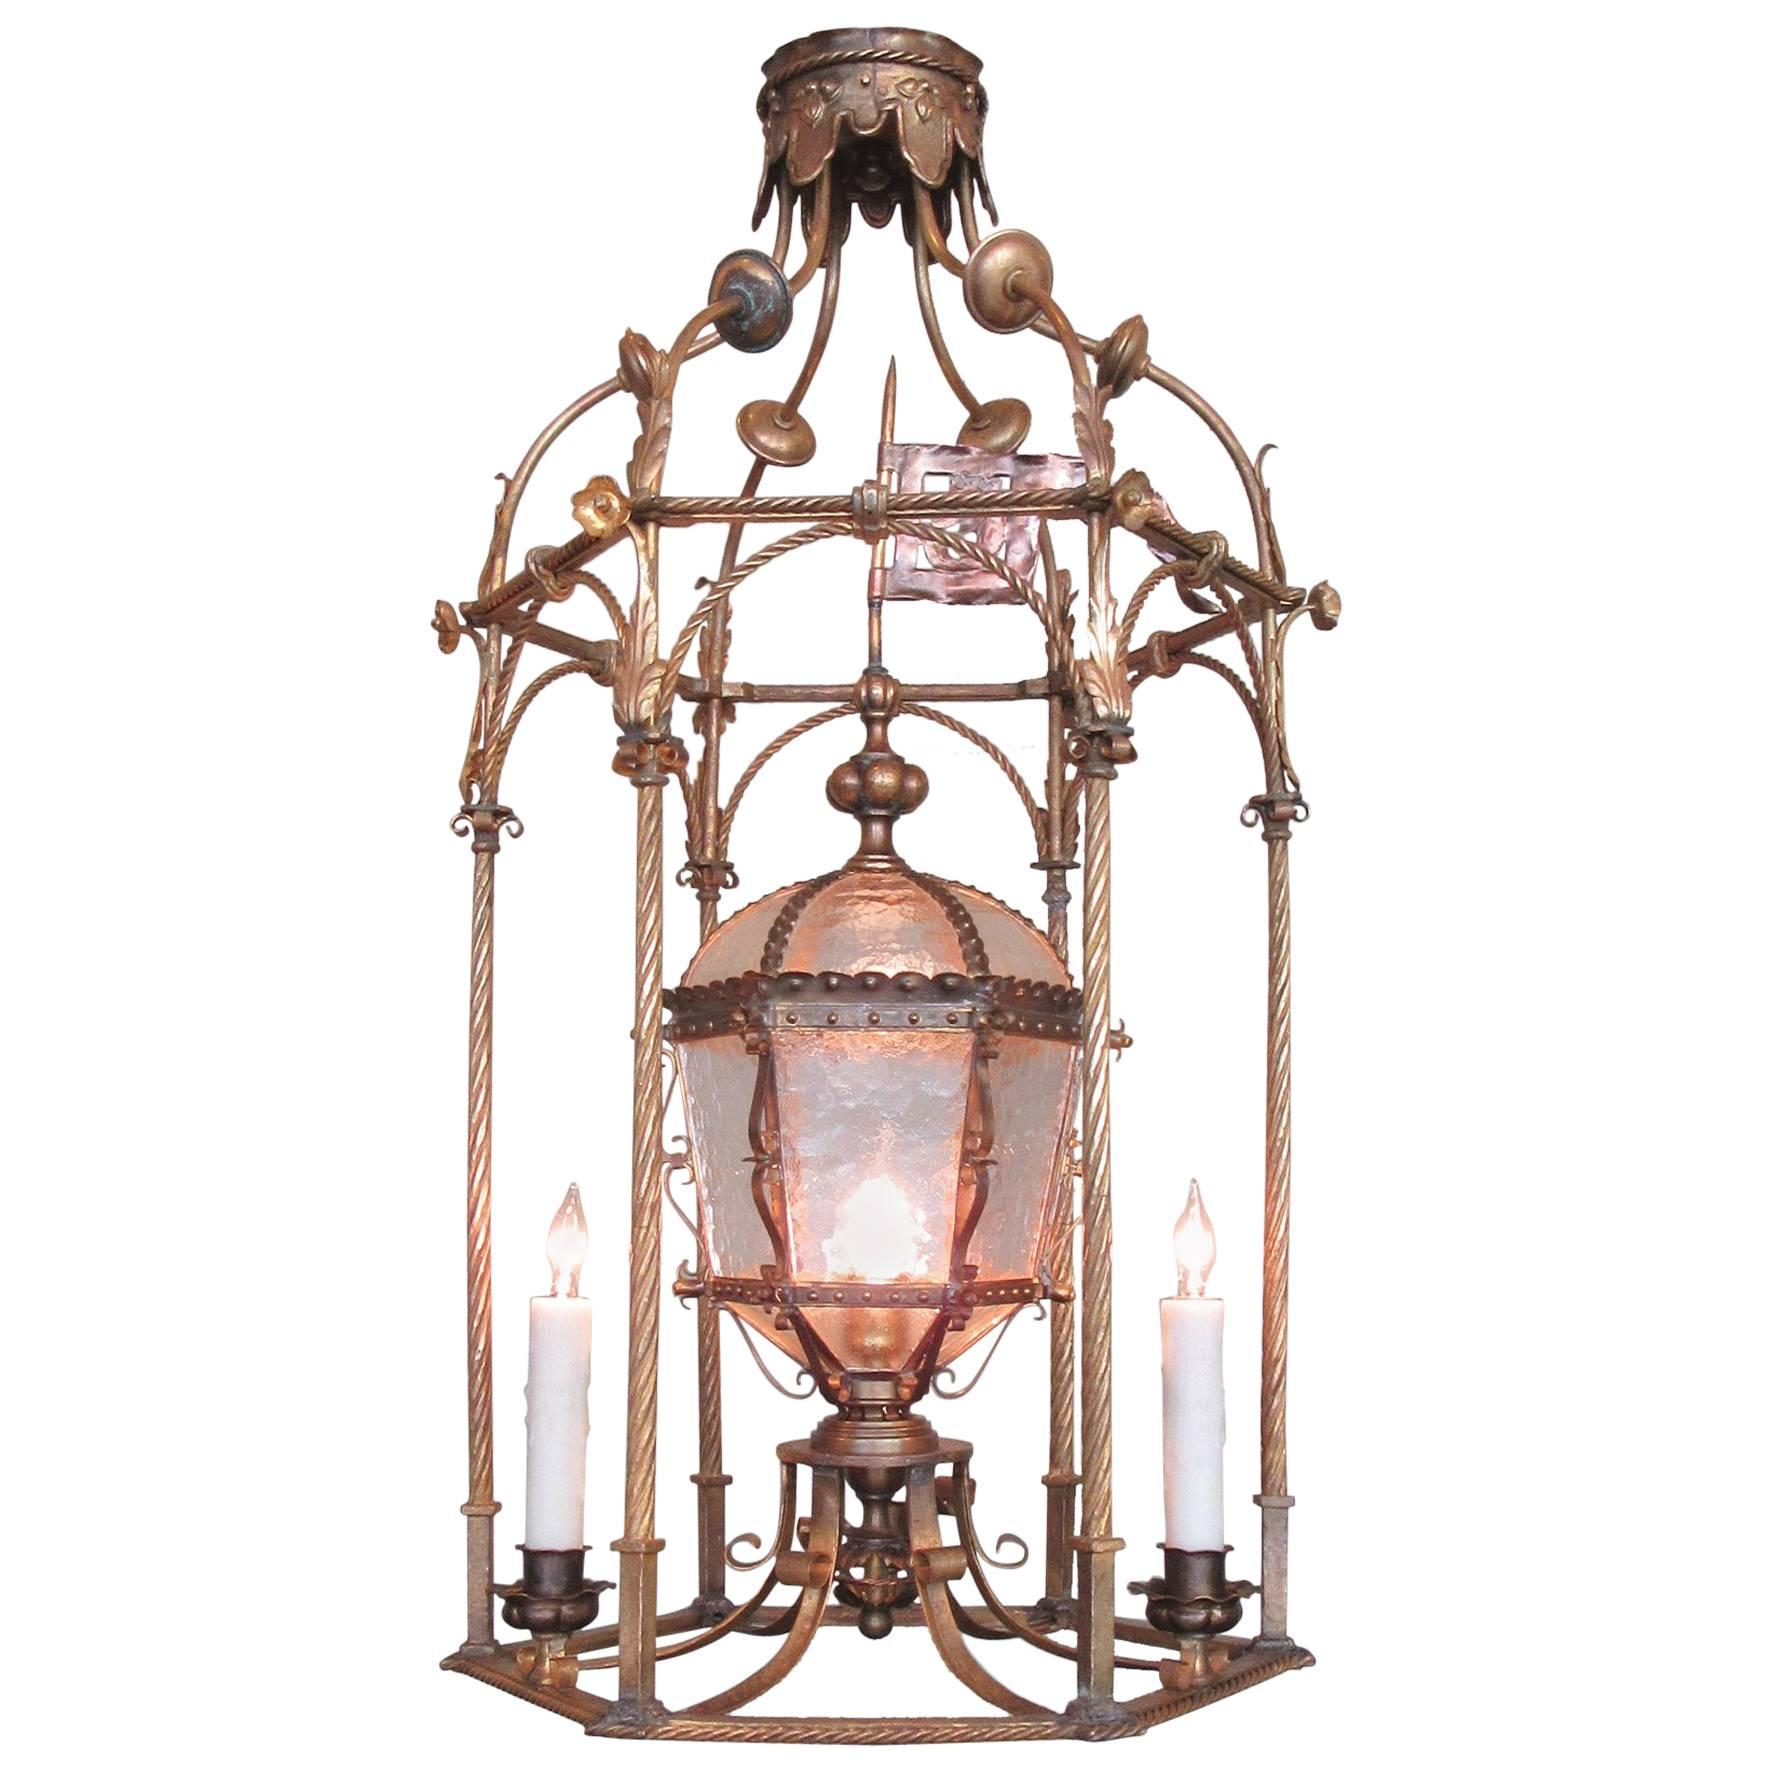 19th Century Italian Venetian Gilt Tole Lantern with Oil Lamp